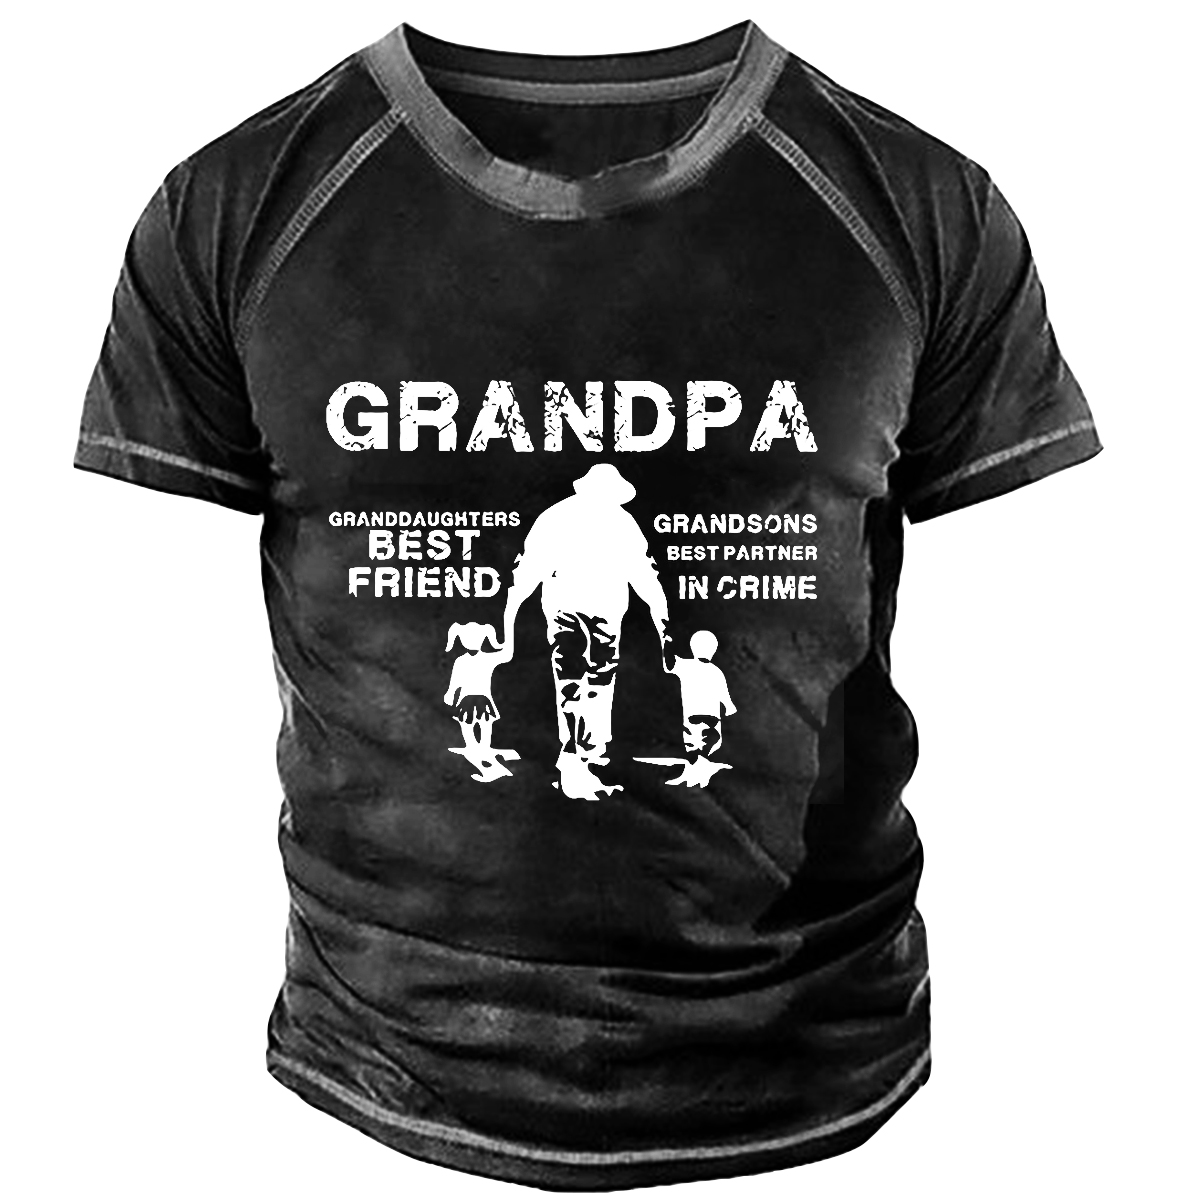 Men's Vintage Grandpa Round Neck Chic Short Sleeve T-shirt